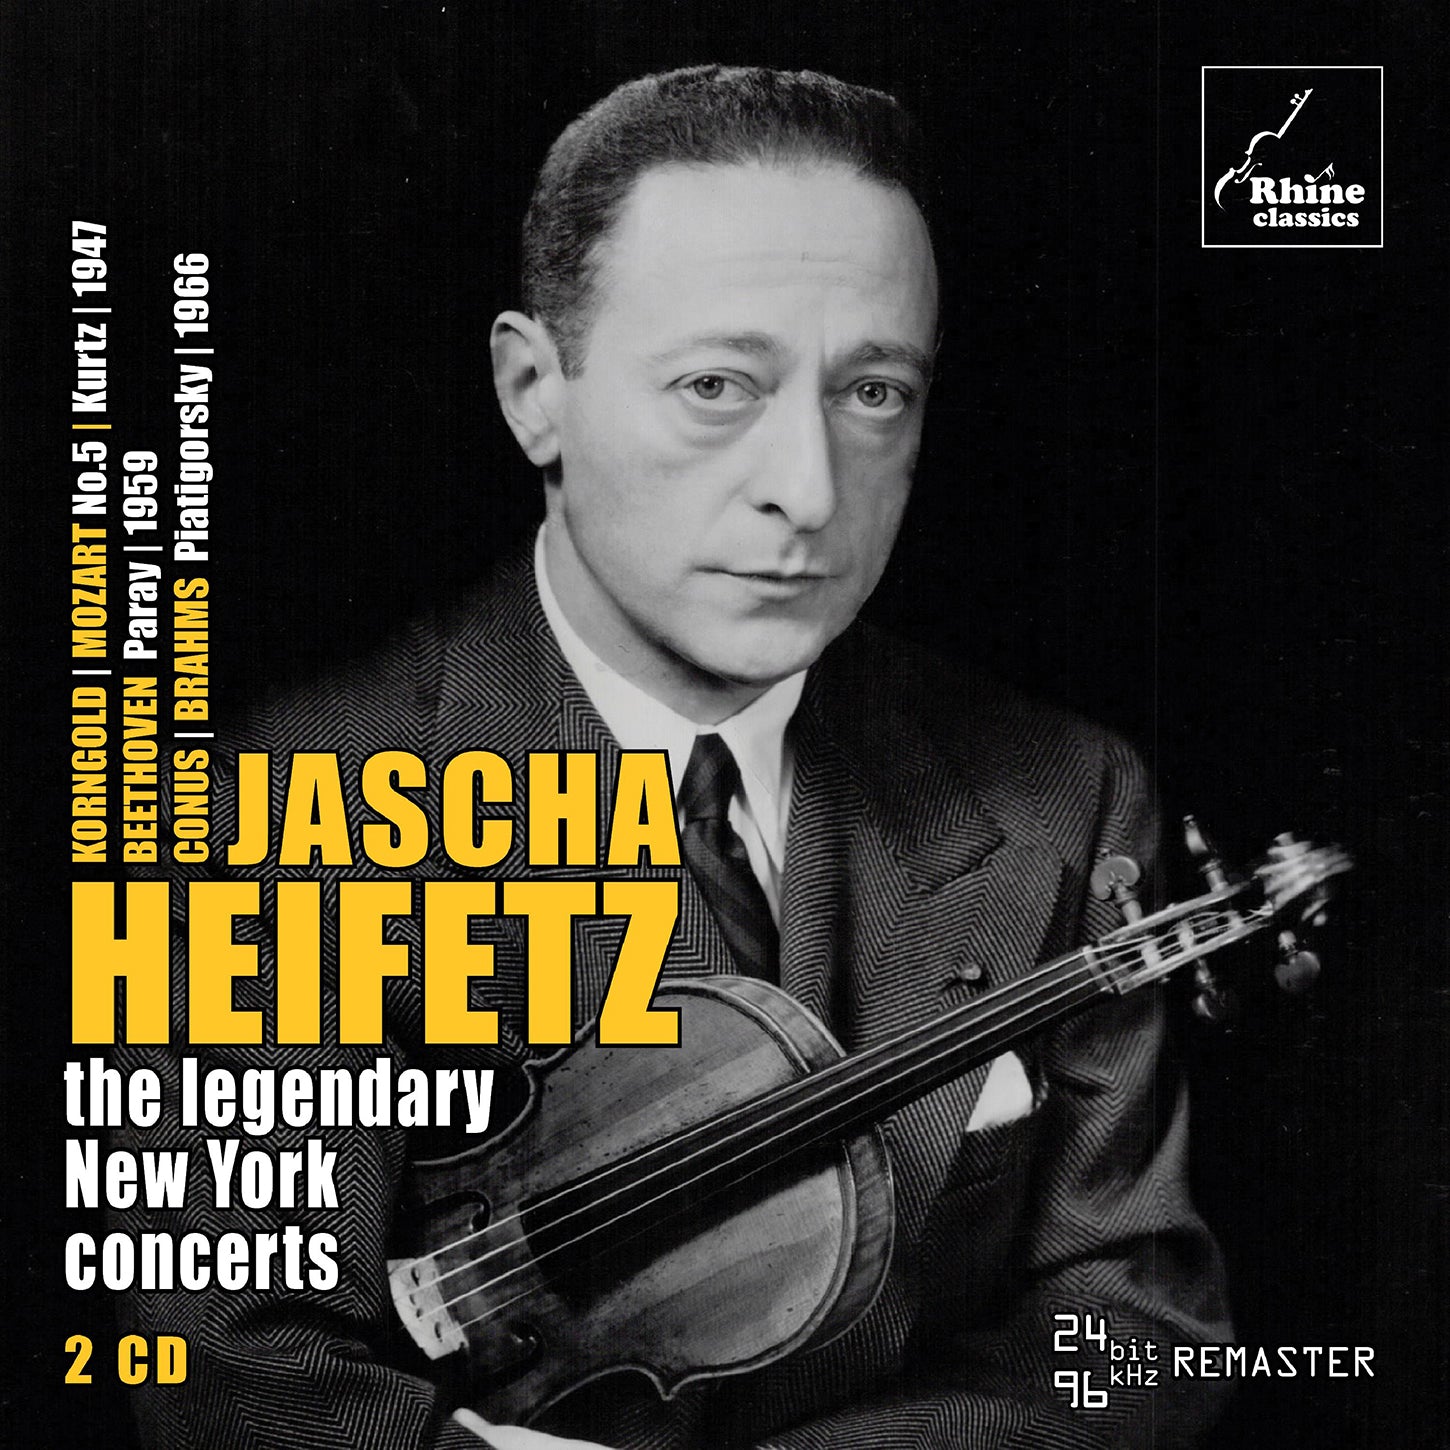 The Legendary New York Concerts / Jascha Heifetz